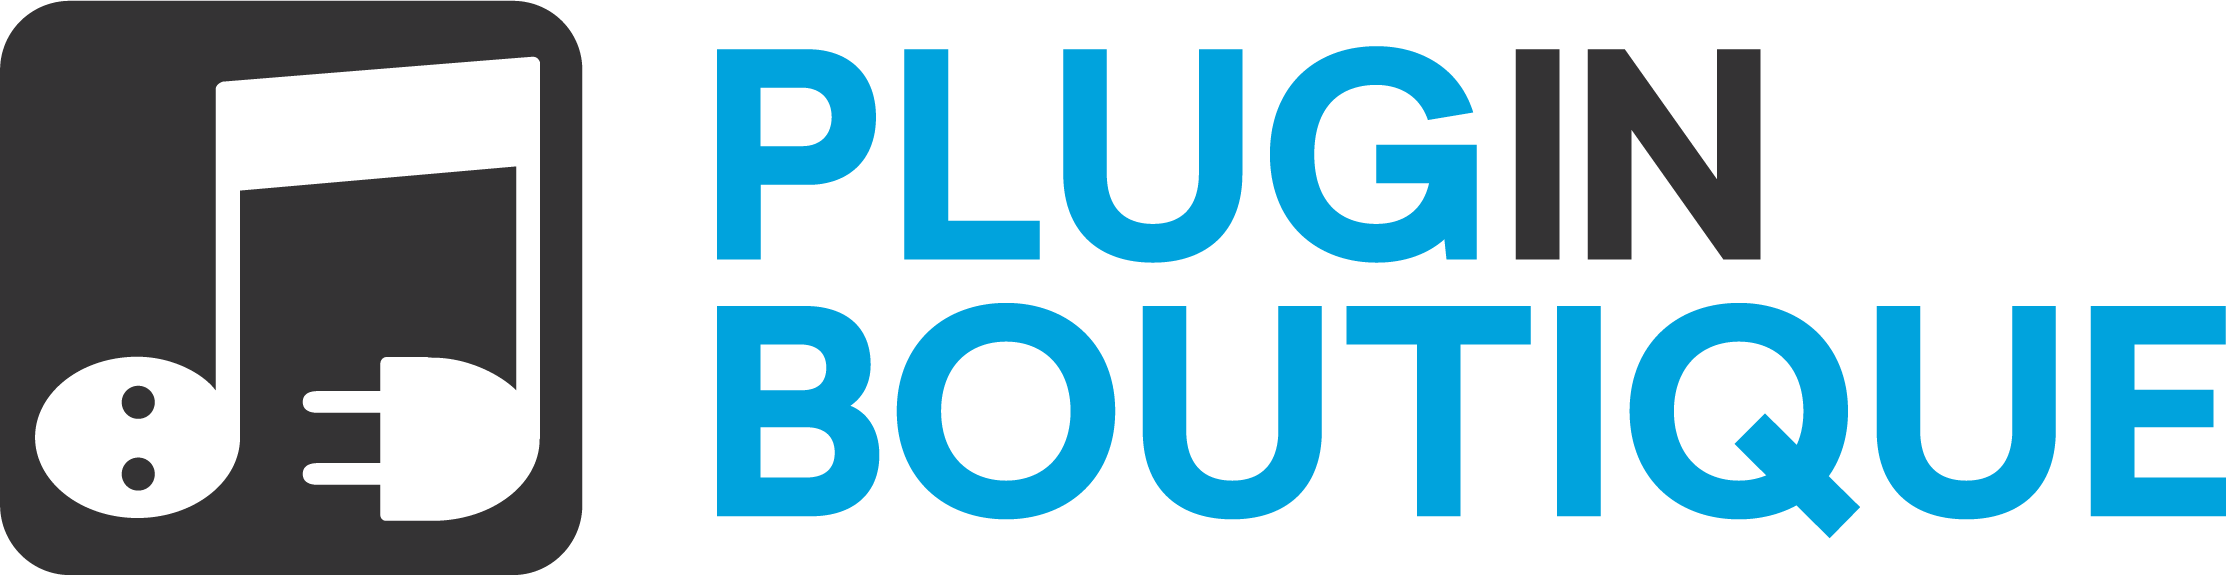 Plugin Boutique Scaler 2+ Advanced Bundle Make Music Day Sale (Exclusive) – 25% Off